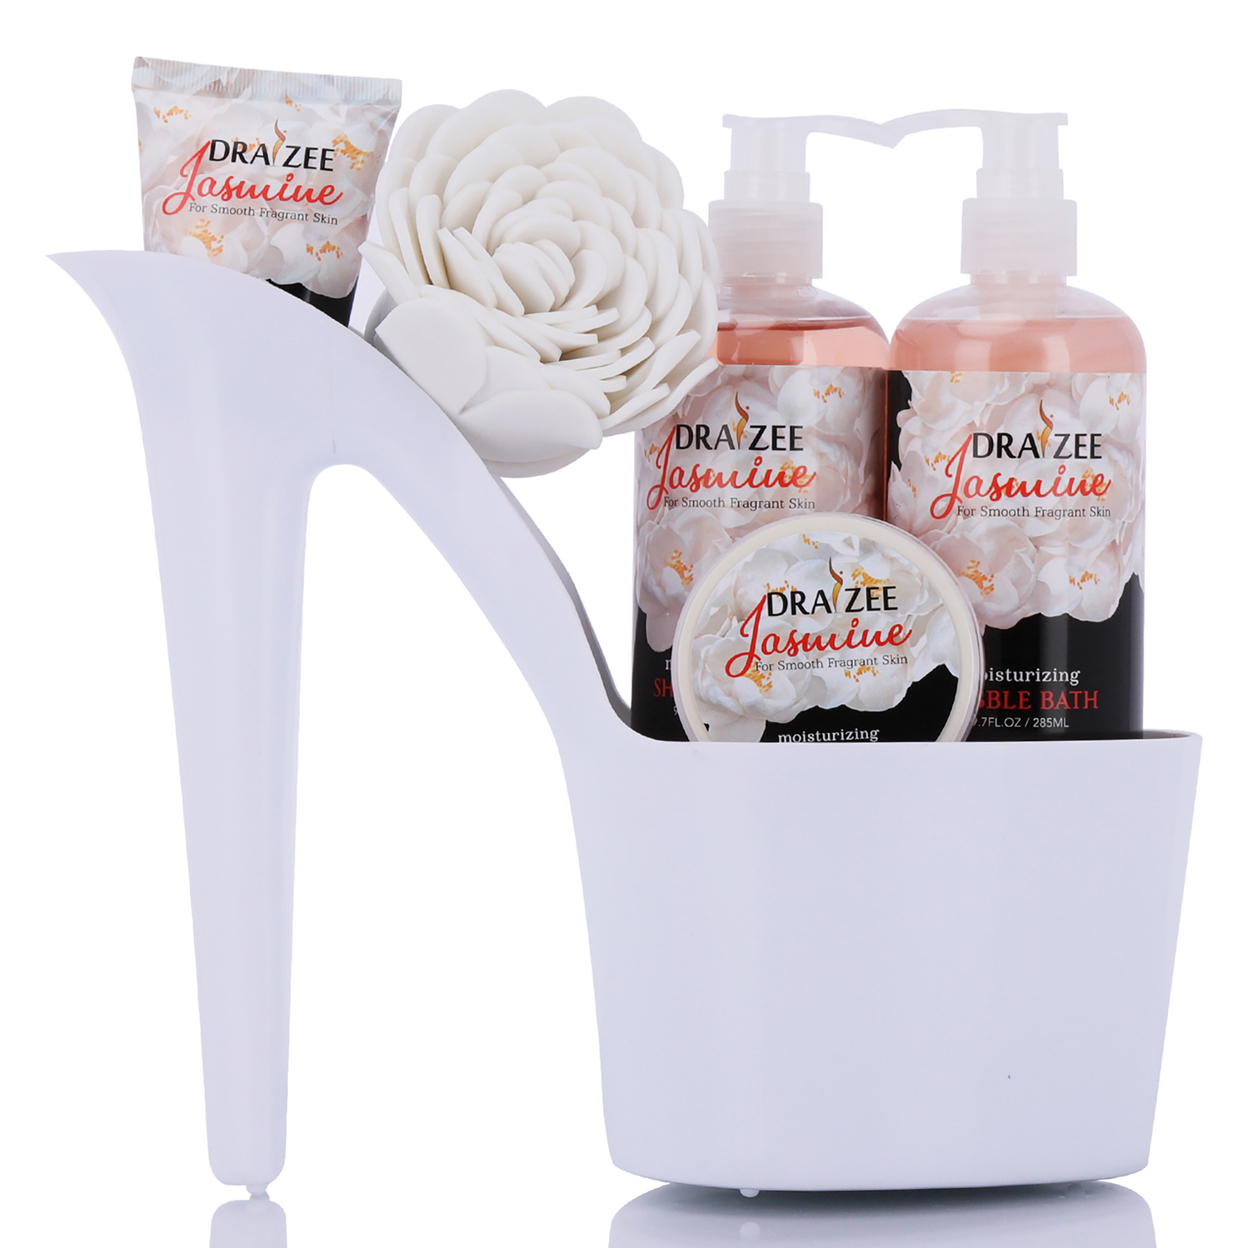 Draizee Heel Shoe Spa Gift Set Jasmine Scented Bath Essentials Gift Basket With Shower Gel, Bubble Bath, Body Butter, Body Lotion